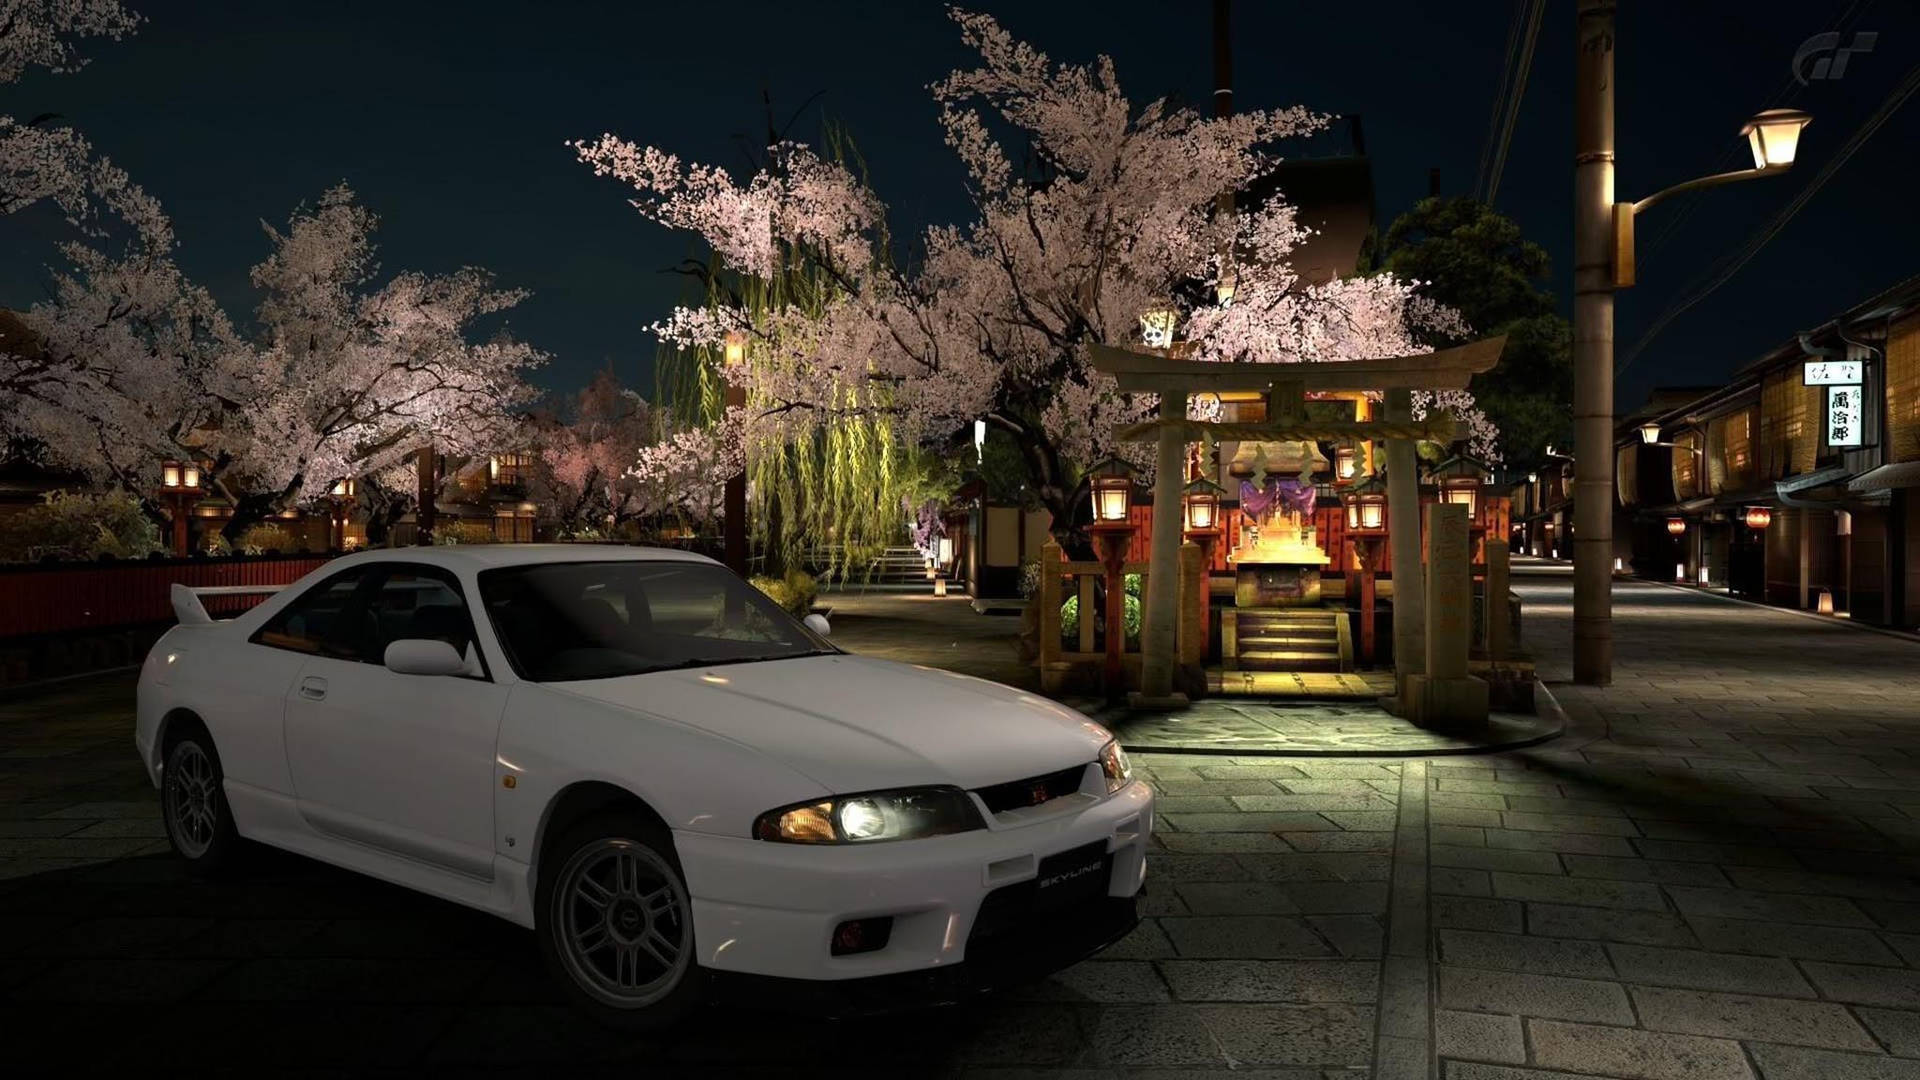 Cherry blossom season with the iconic Nissan Skyline GTR R33 Wallpaper